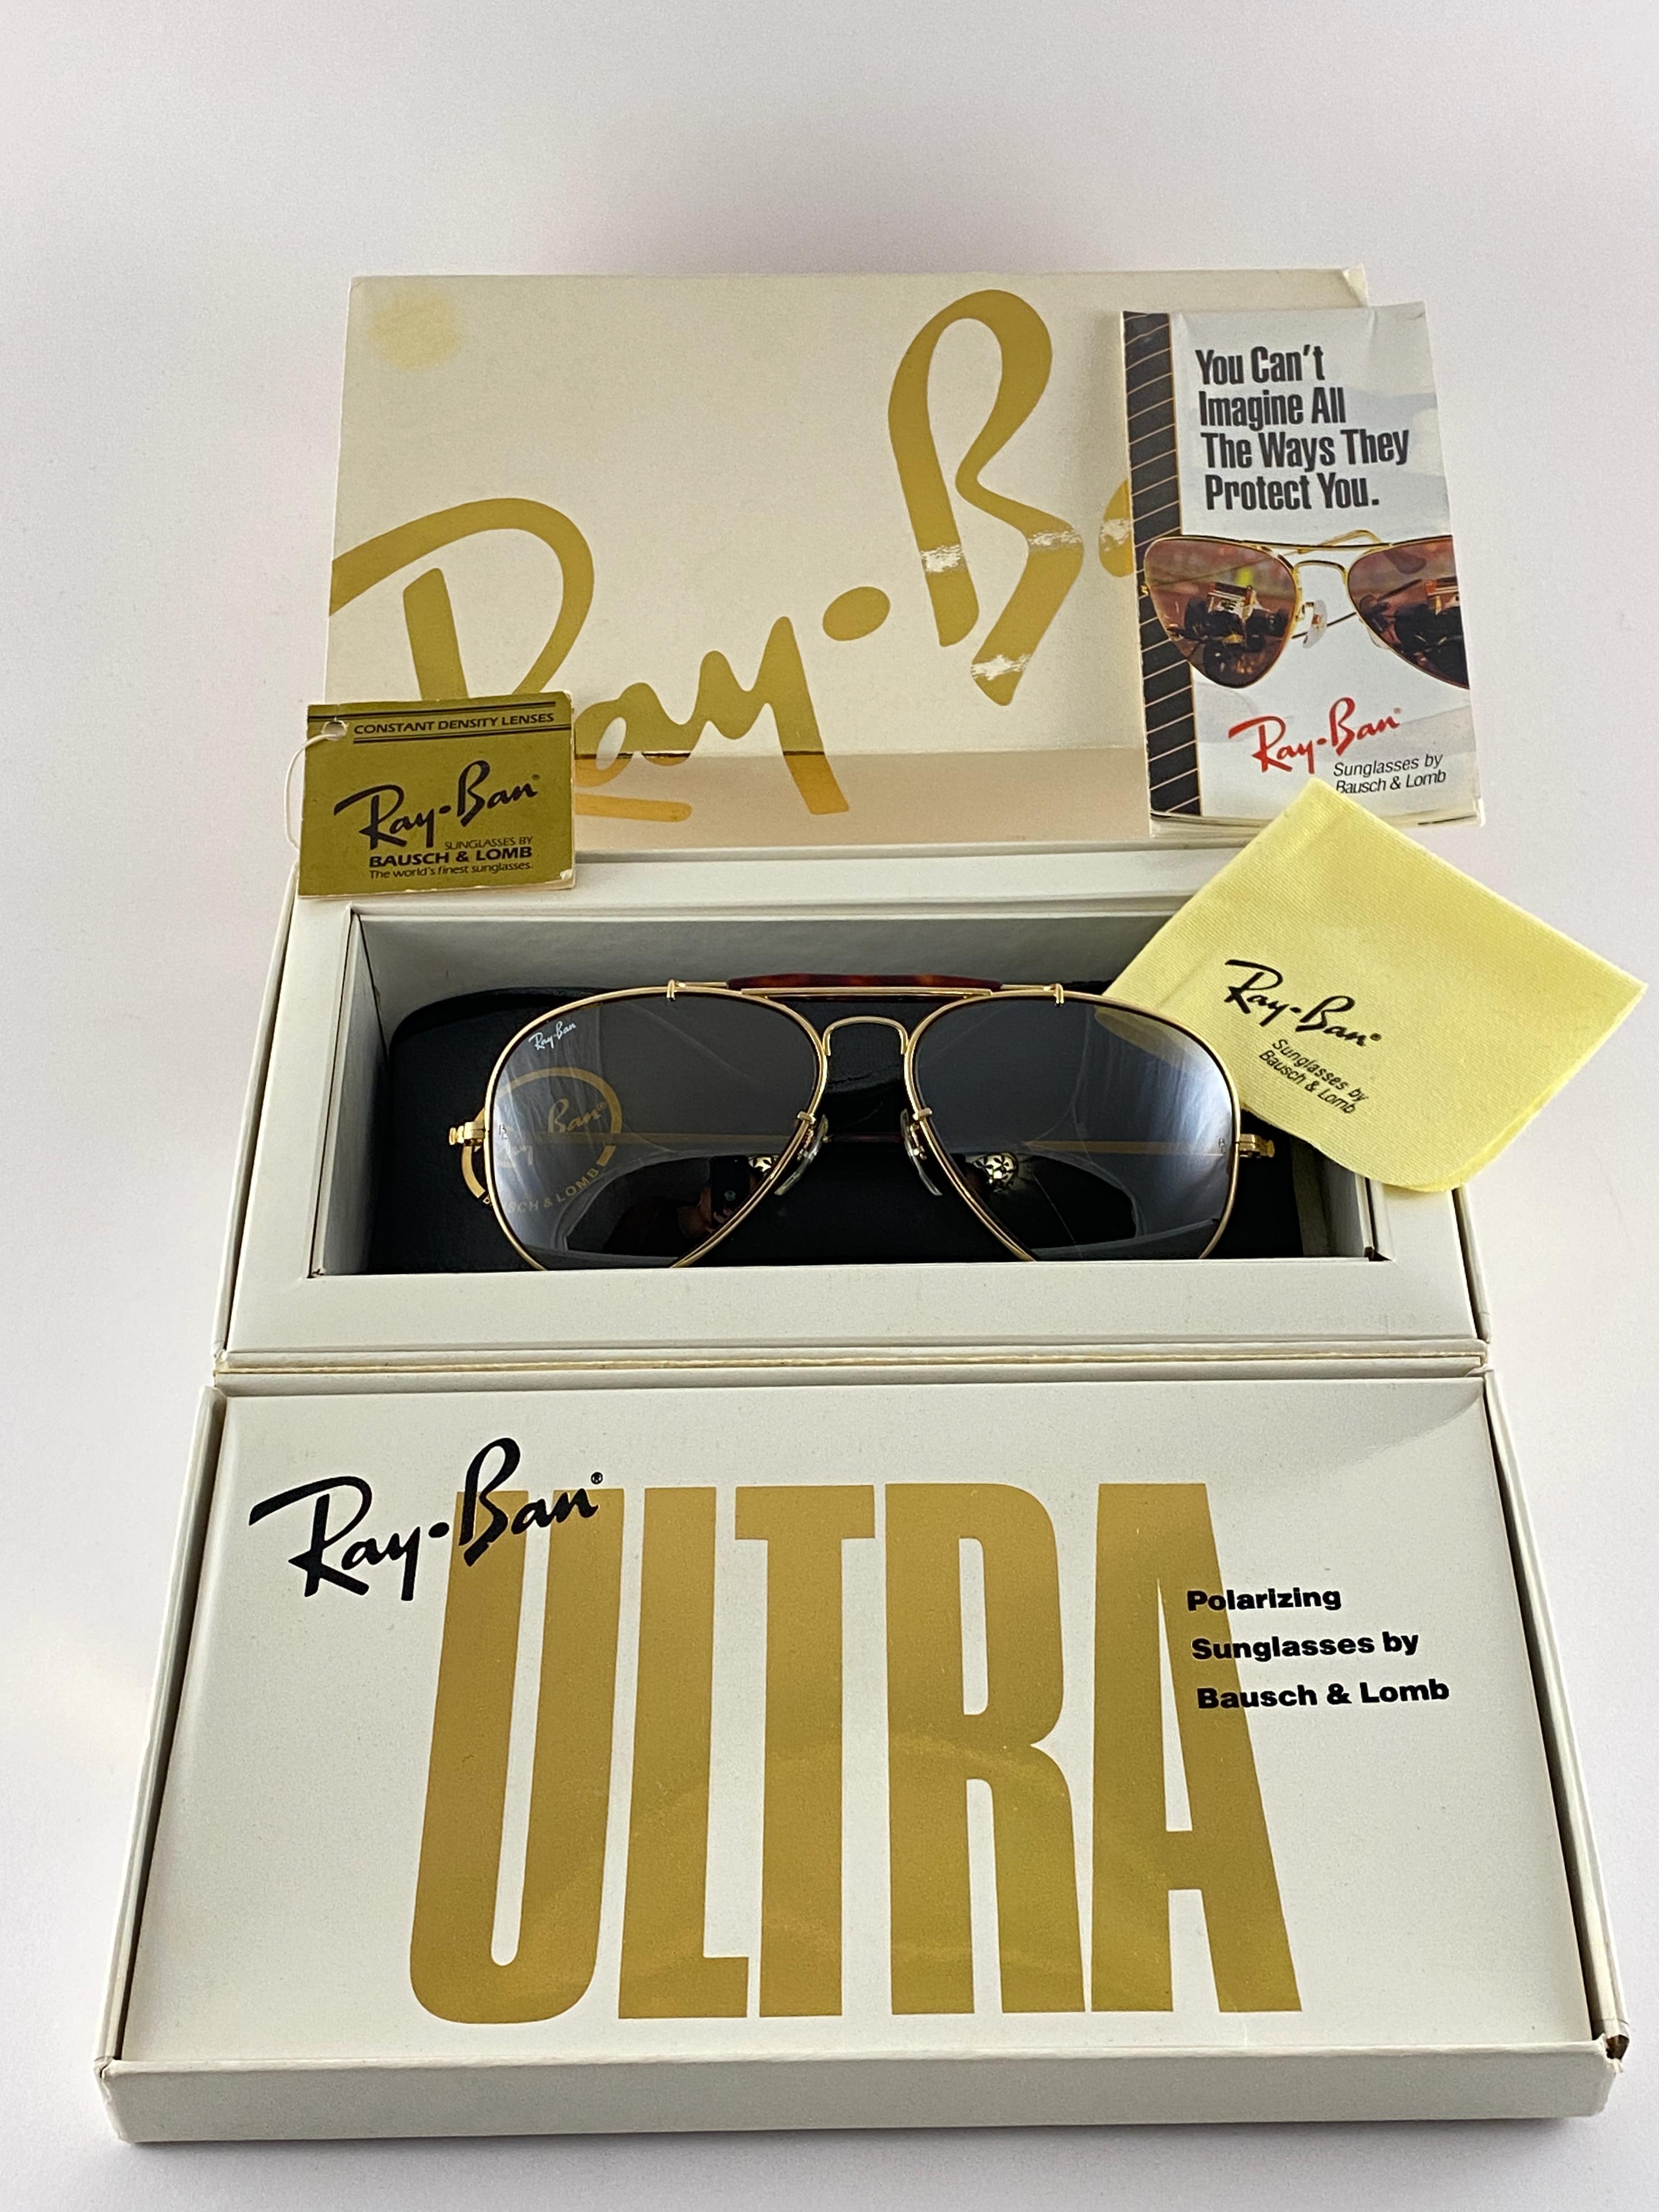 New Ray Ban ULTRA 58Mm Bravura Frame Full Set Bausch & Lomb Sunglasses USA  1